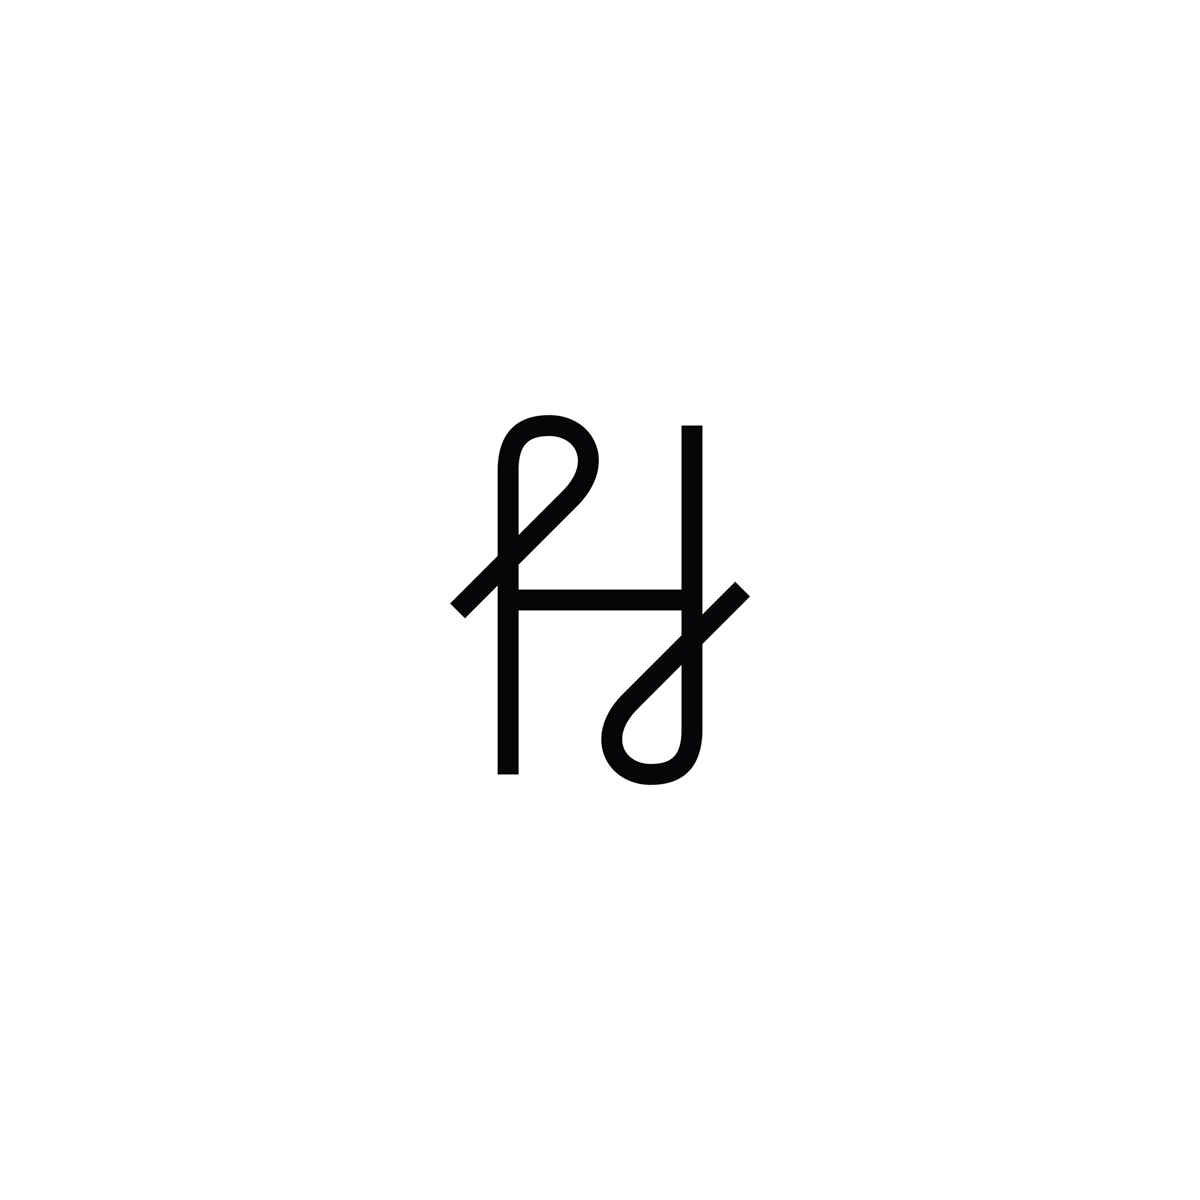 a to z logo logos A logo b logo C logo d logo letter logos alphabet logos